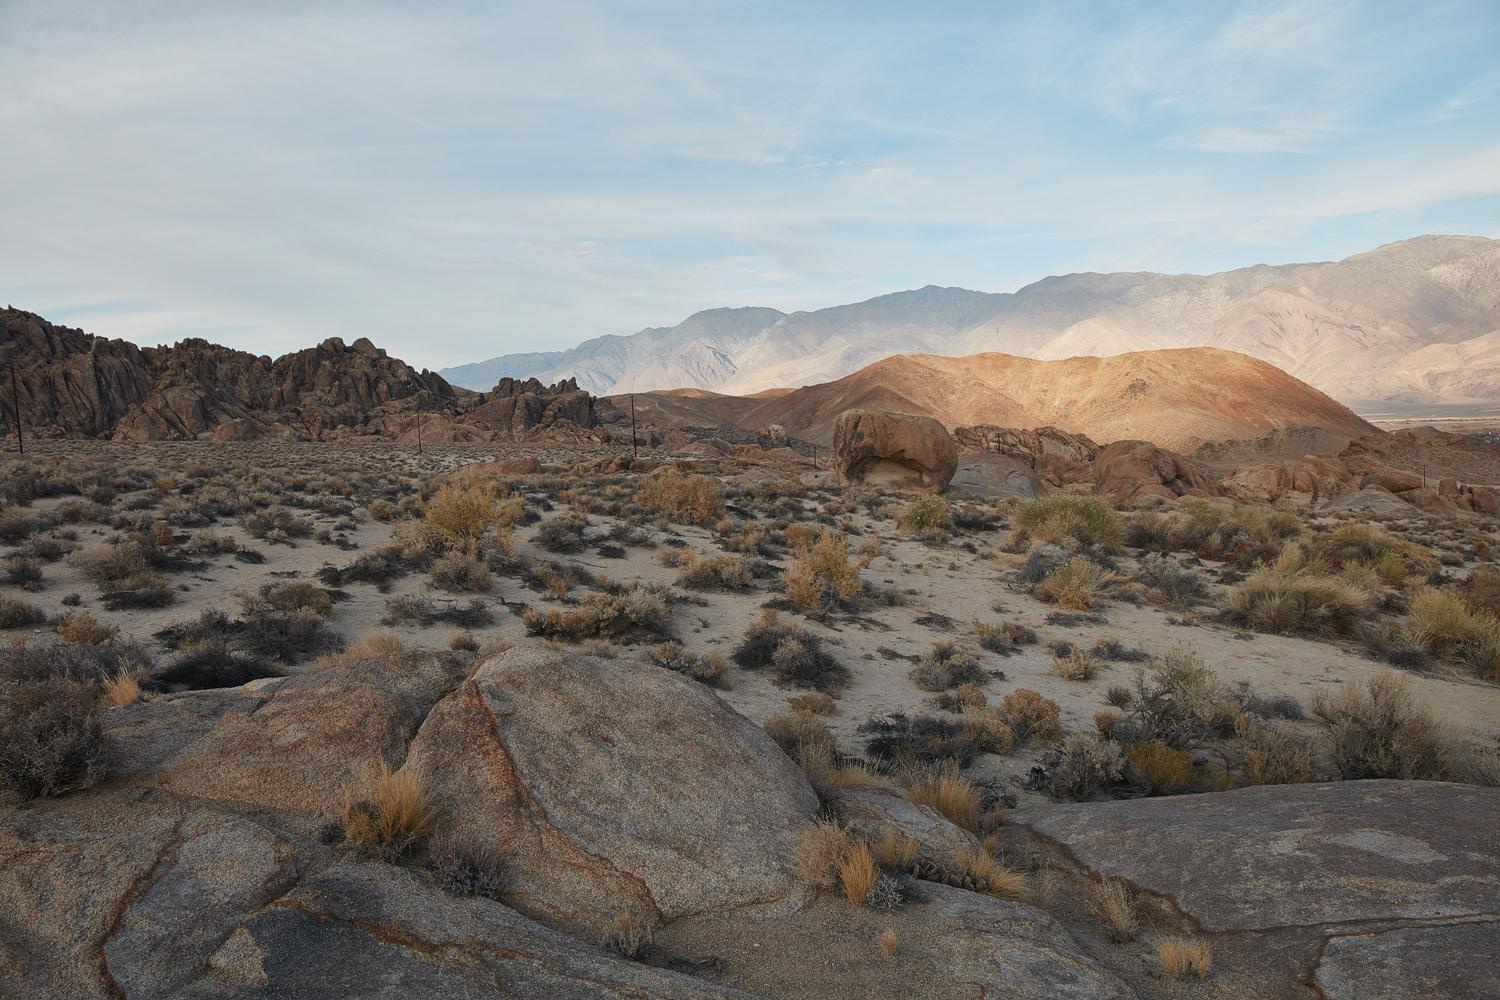 Frank Schott Color Photograph - California Dreaming - large scale photograph of iconic desert landscape